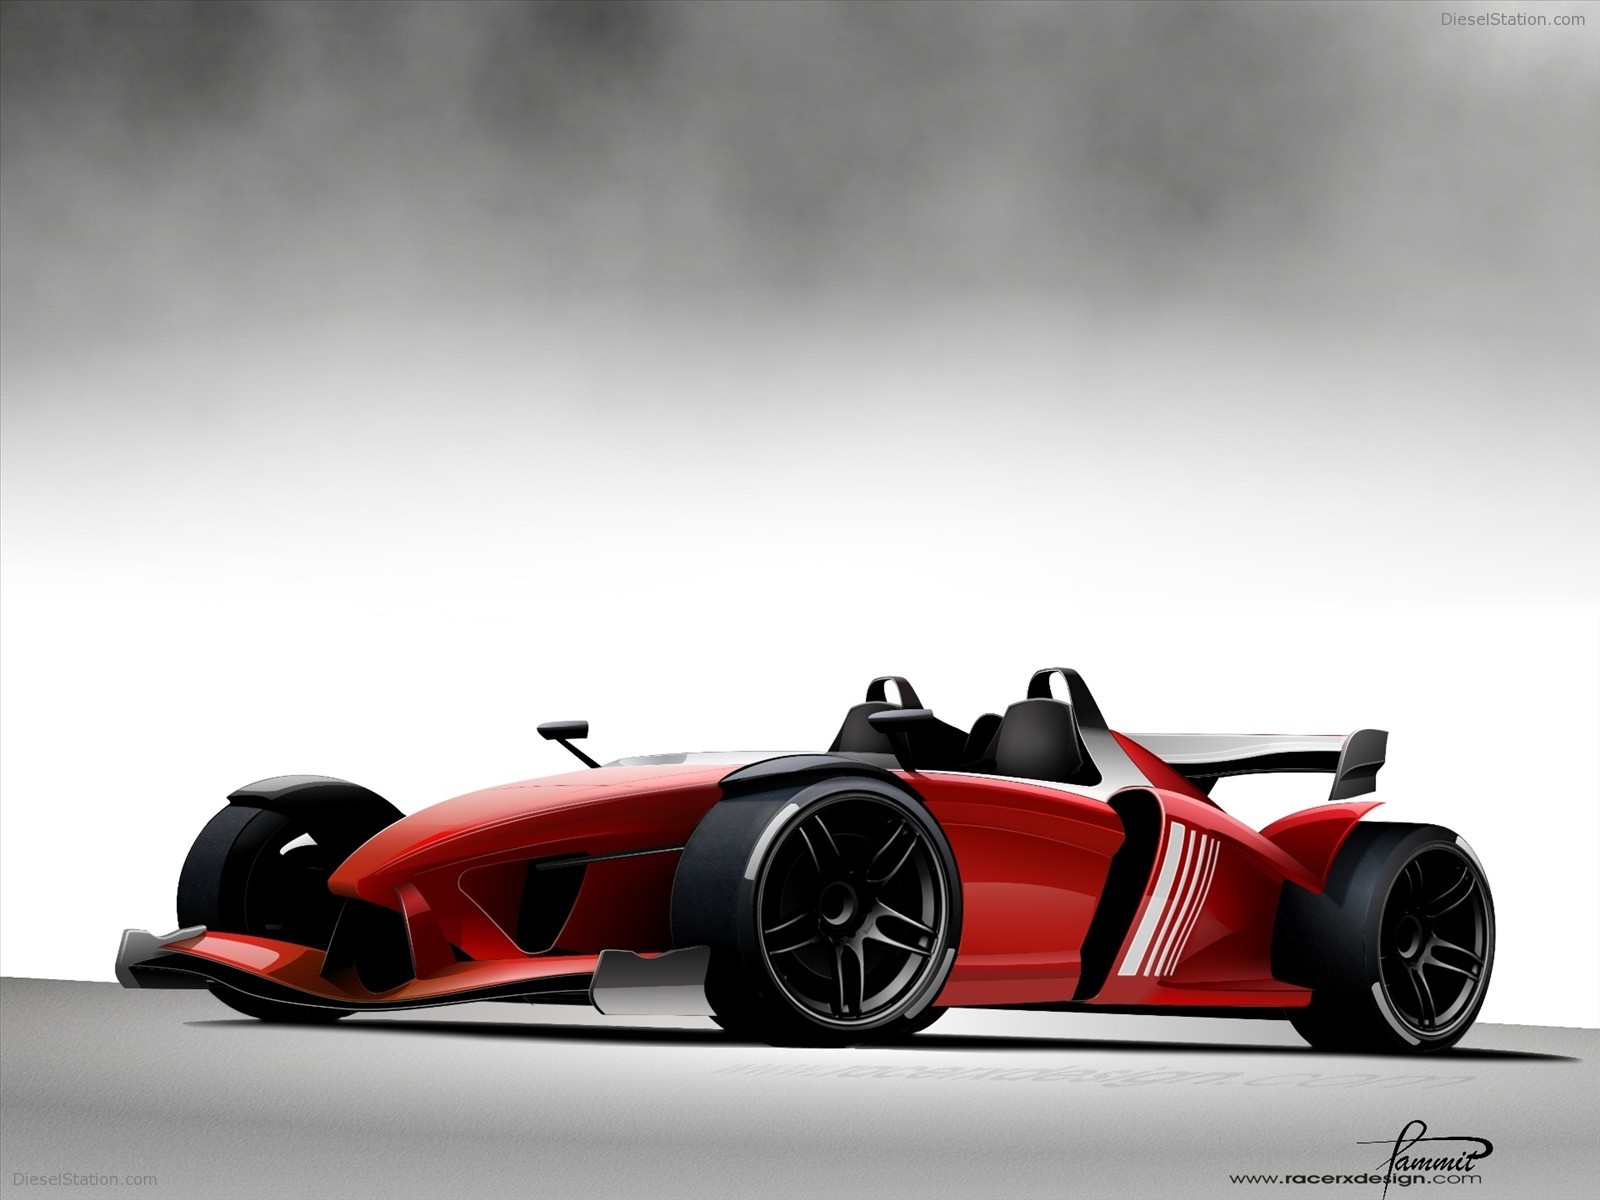 Racer X Design Rz Formula Exotic Car Wallpaper Of Diesel